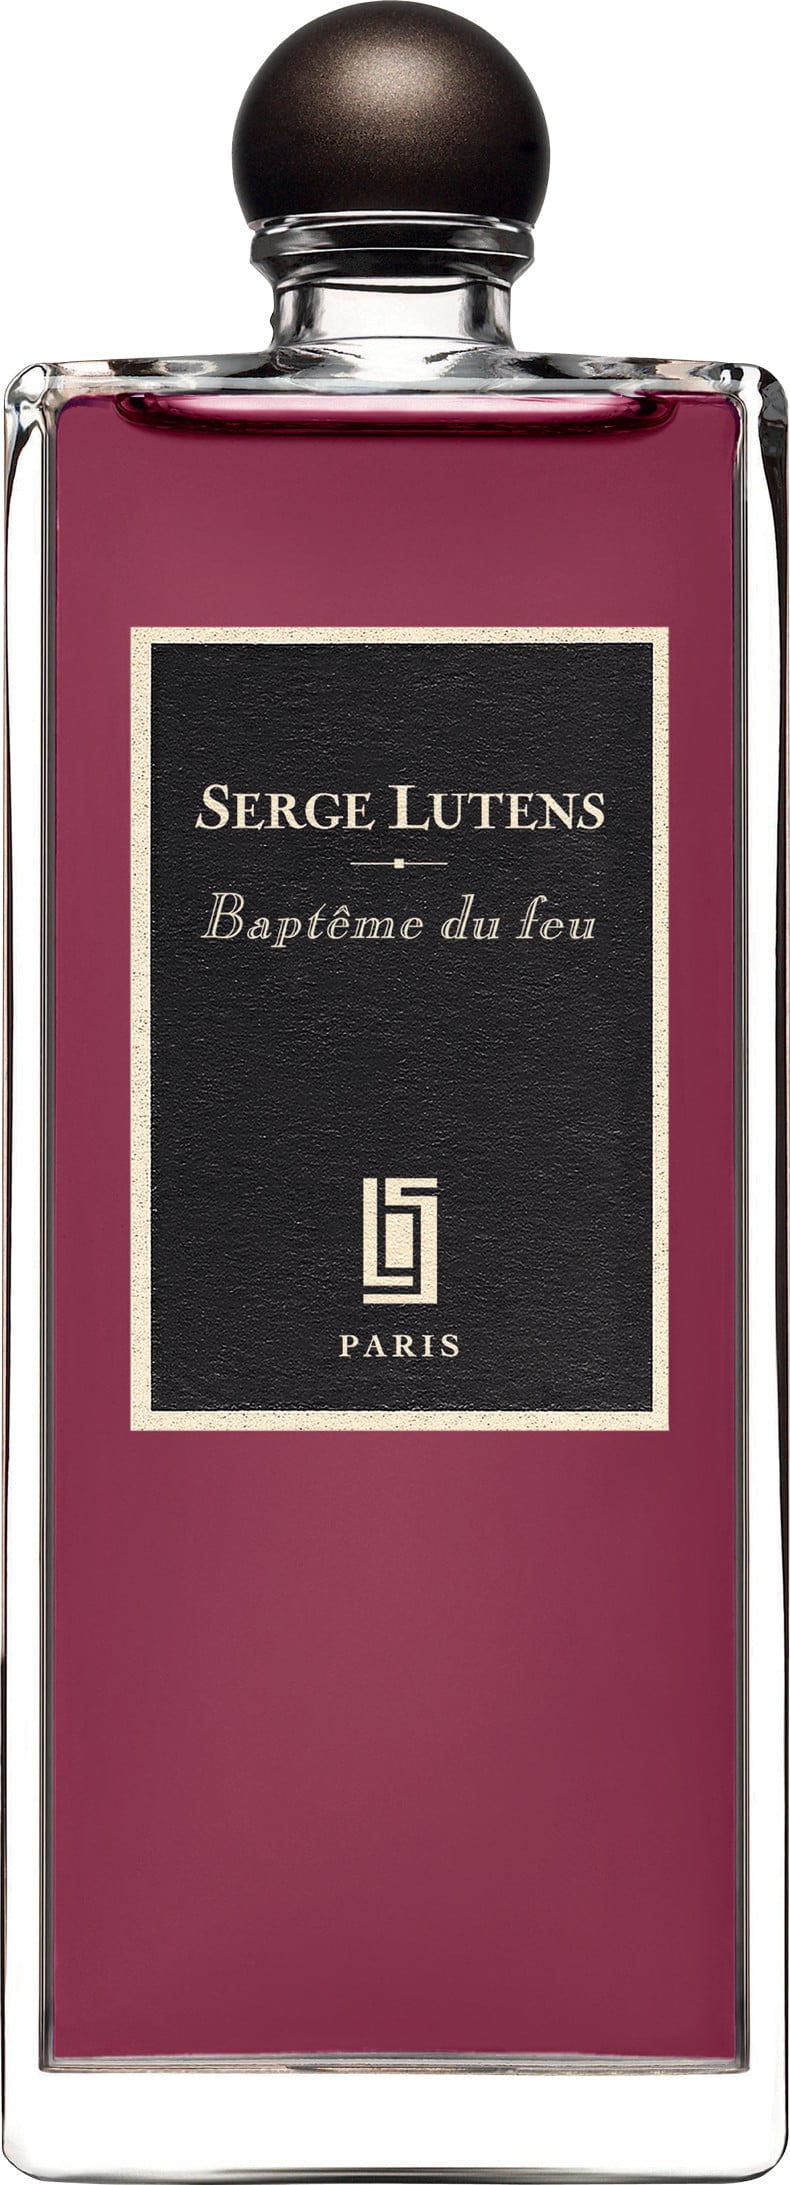 Serge Lutens Bapteme du Feu Perfume